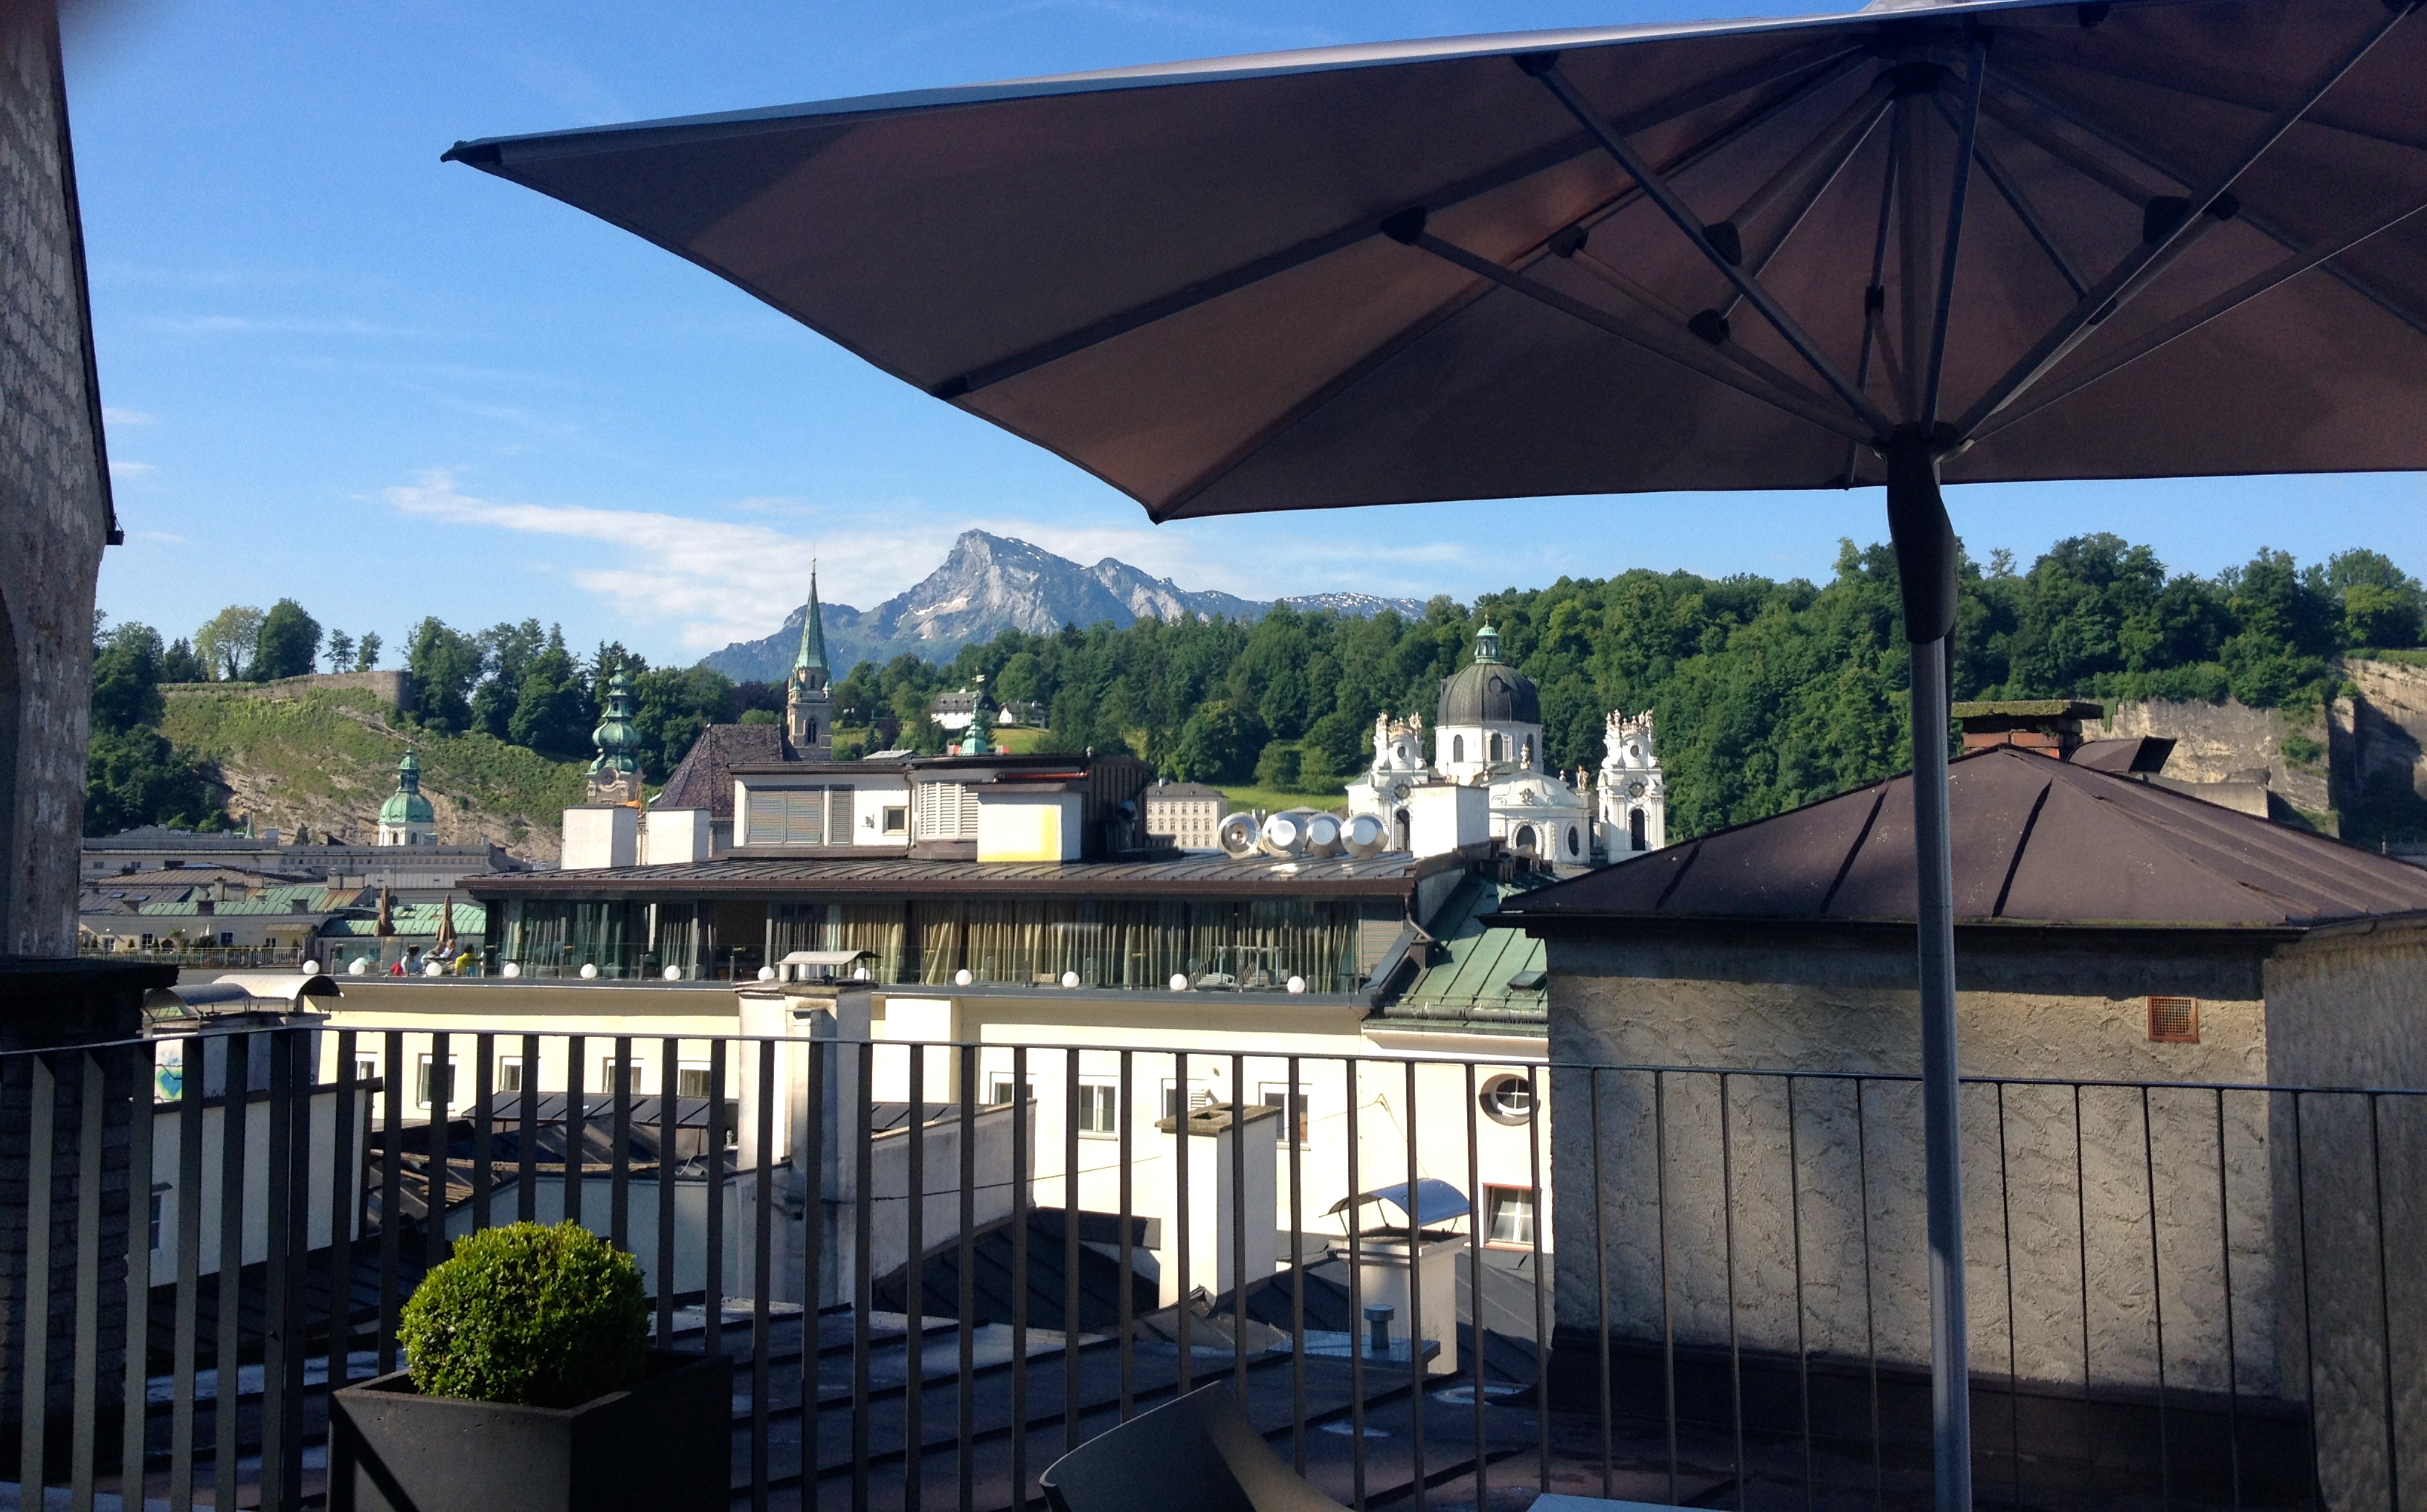 Relaxed weekend in Salzburg La Pulcinella